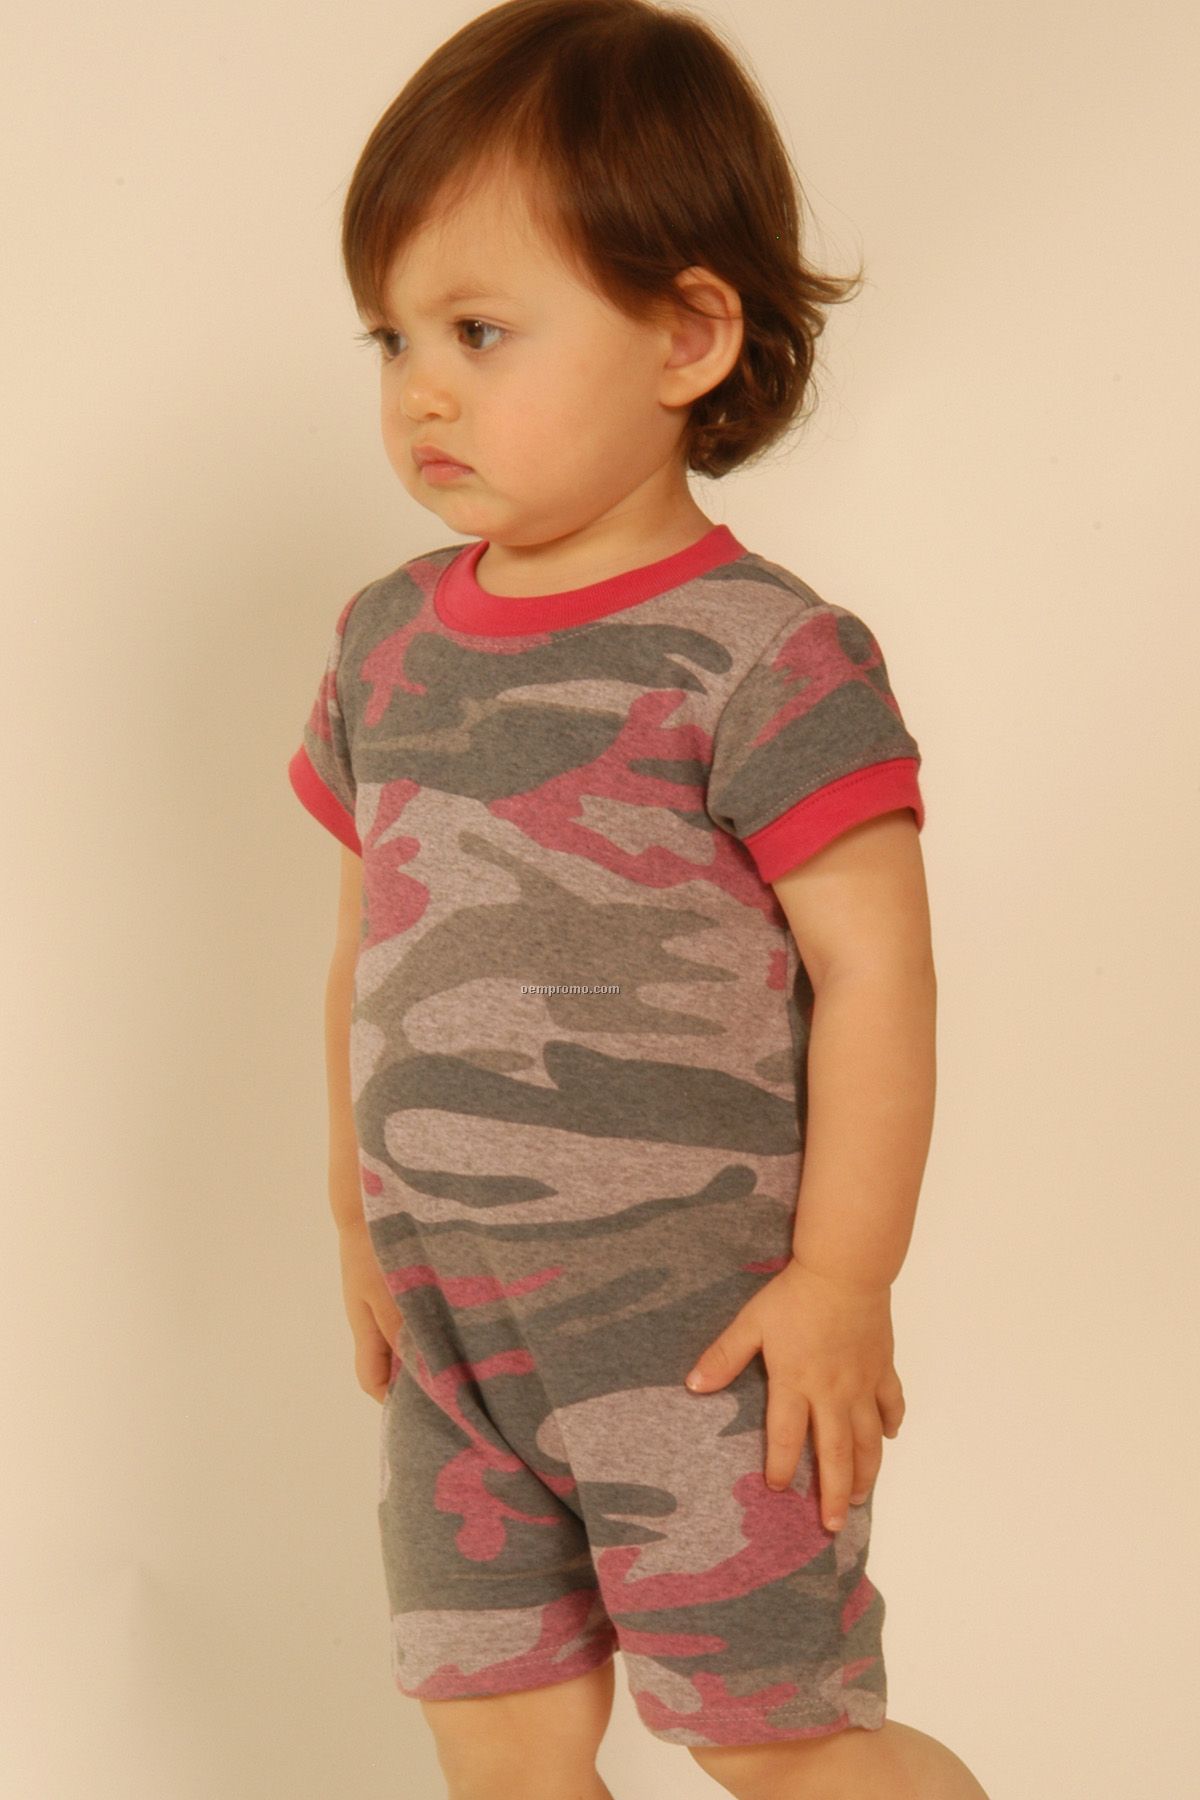 Infants Heather Camouflage Short Sleeve Romper (6m-24m)